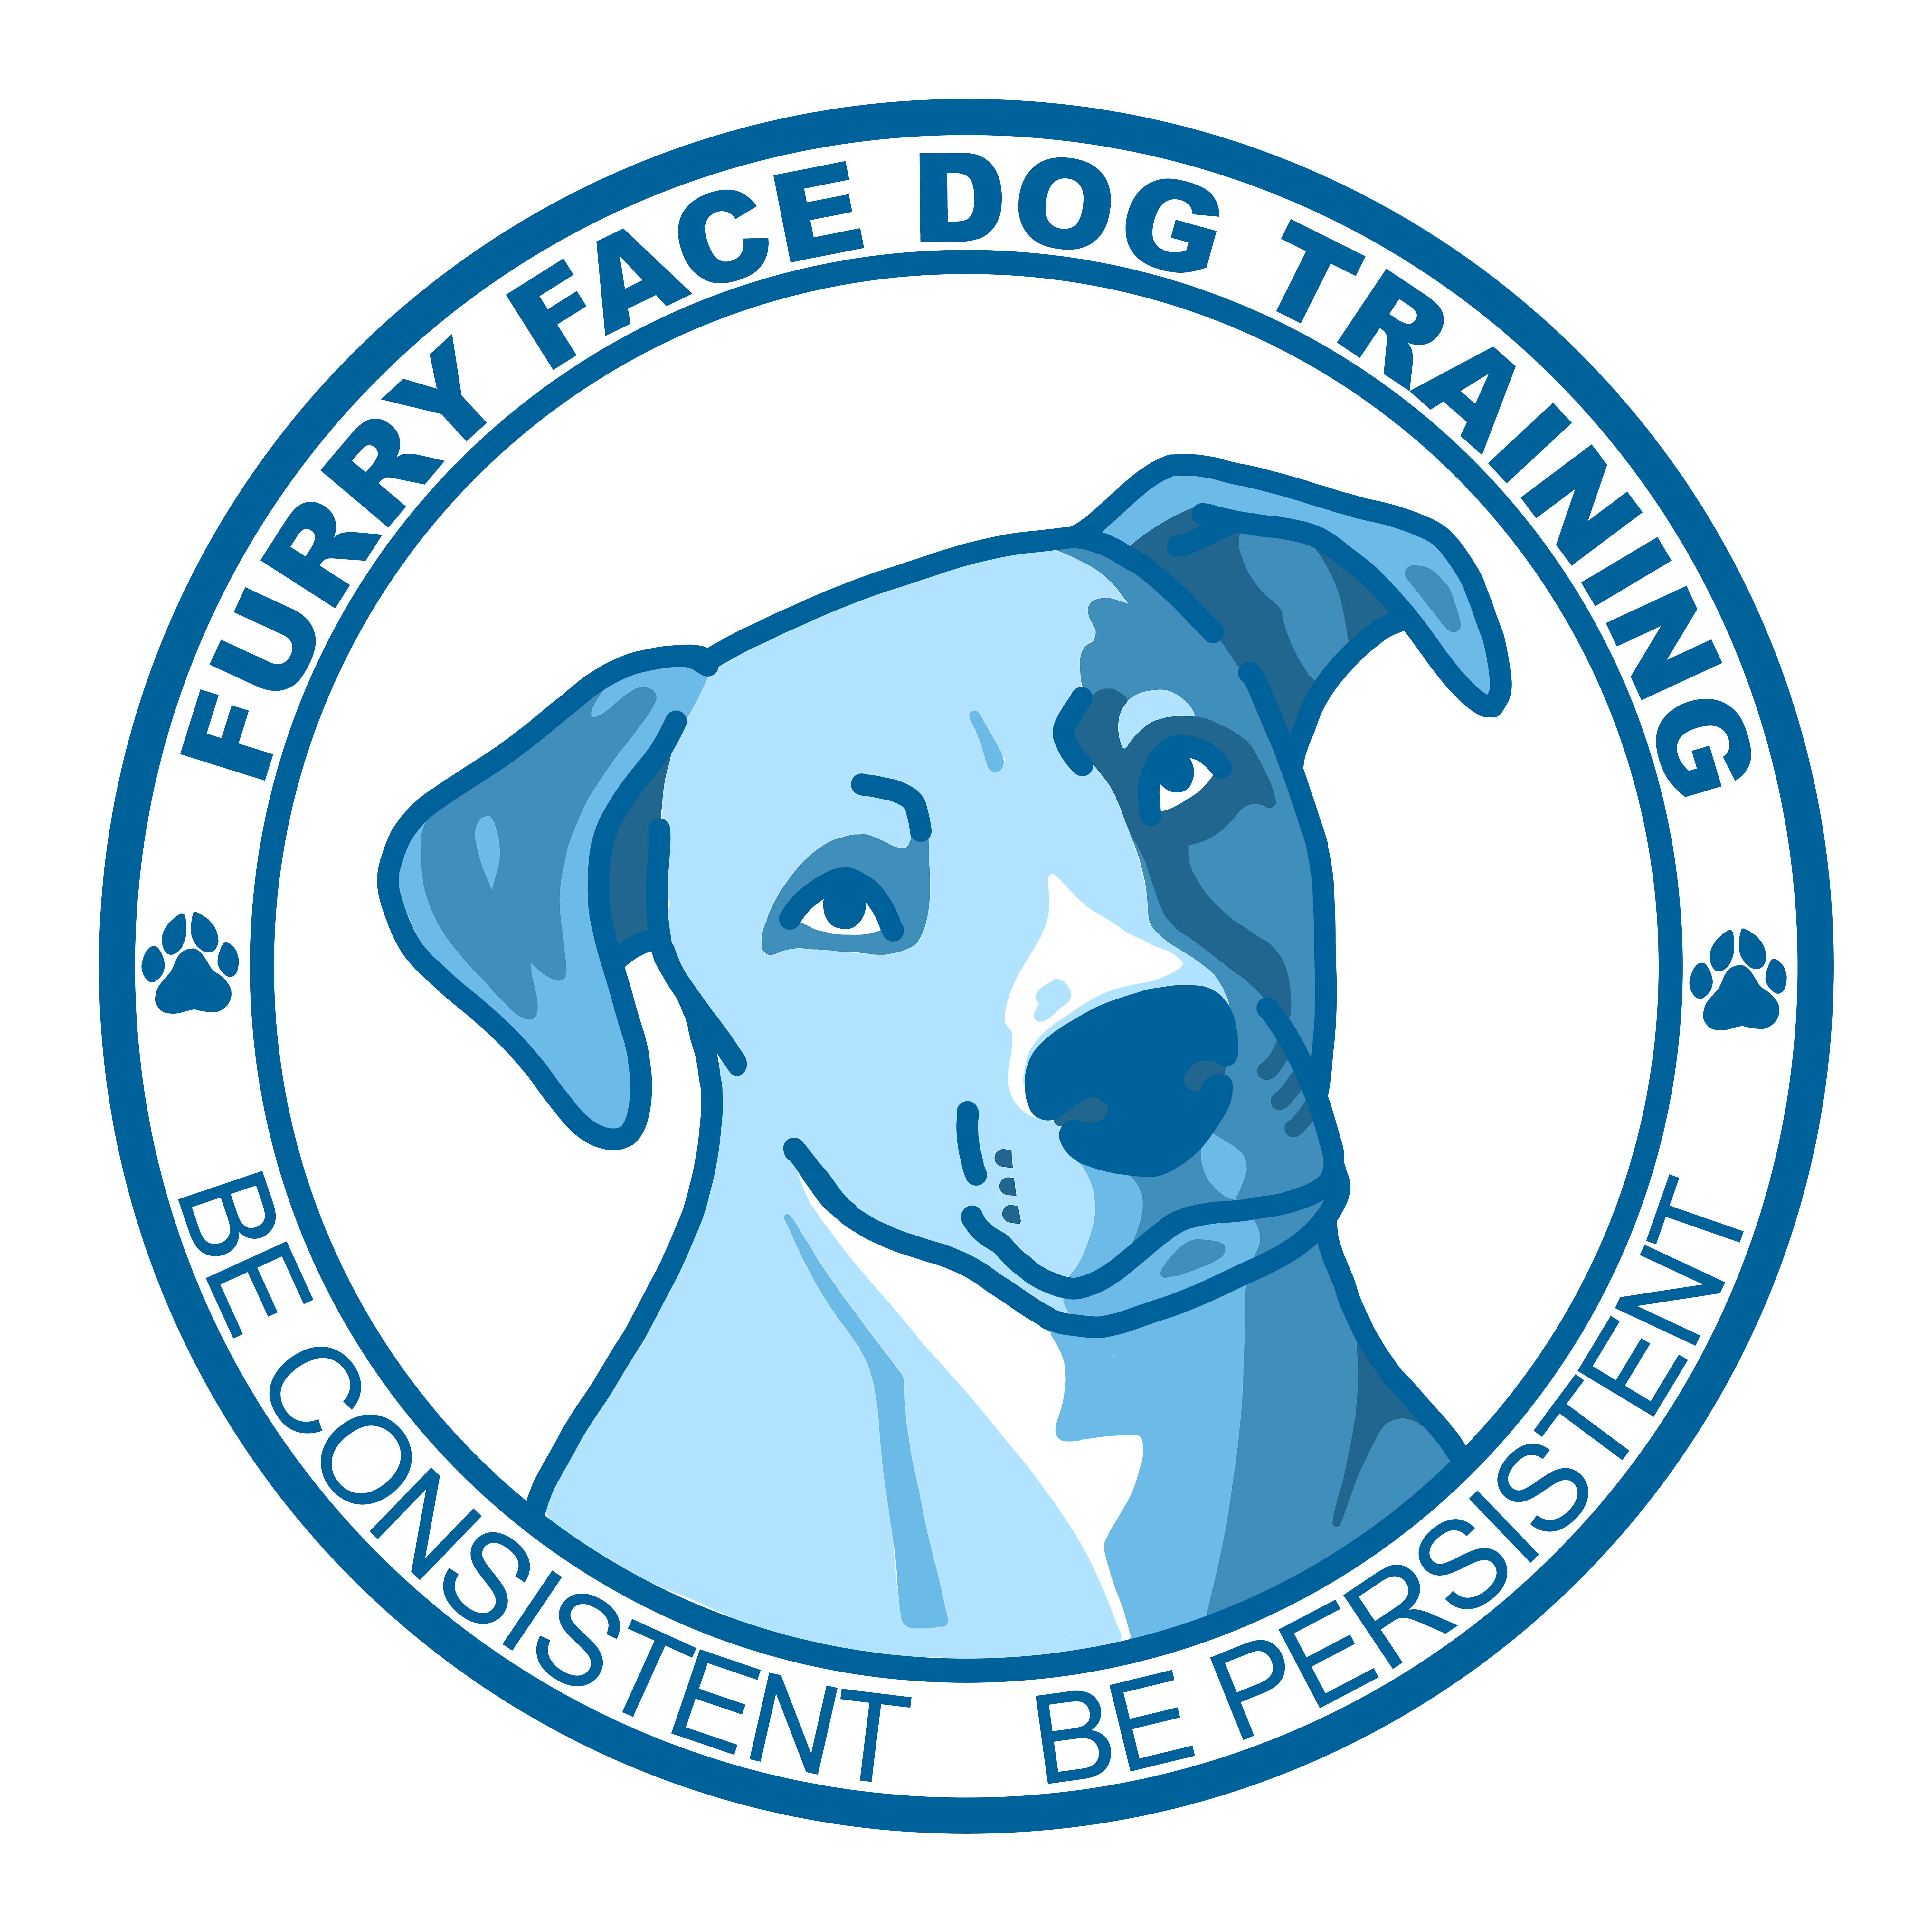 Furry Face Dog Training